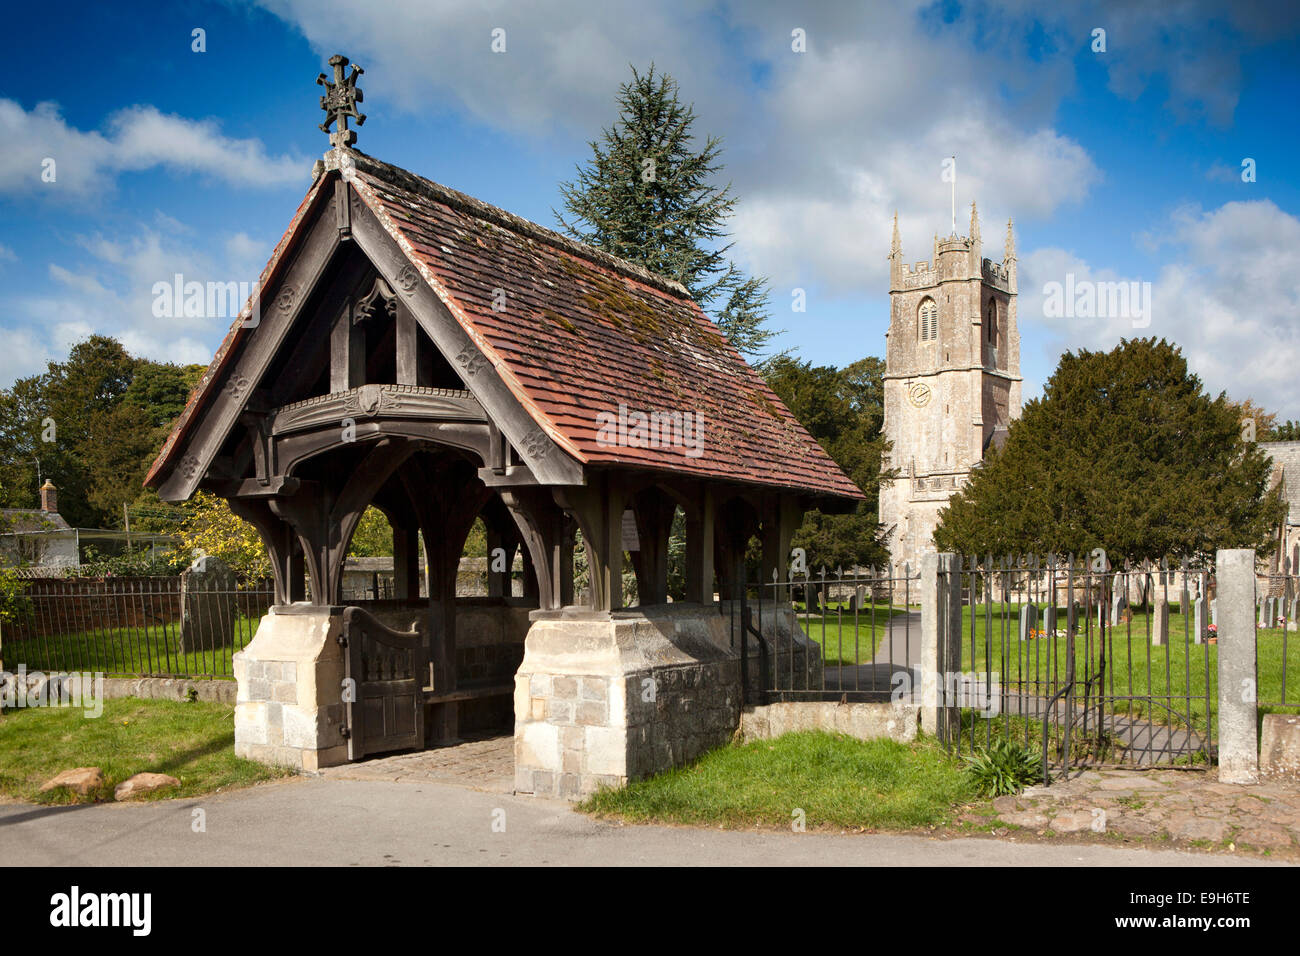 UK, England, Wiltshire, Avebury, Saint James’ Parish Church Lych Gate designed by architect Charles Pointing Stock Photo